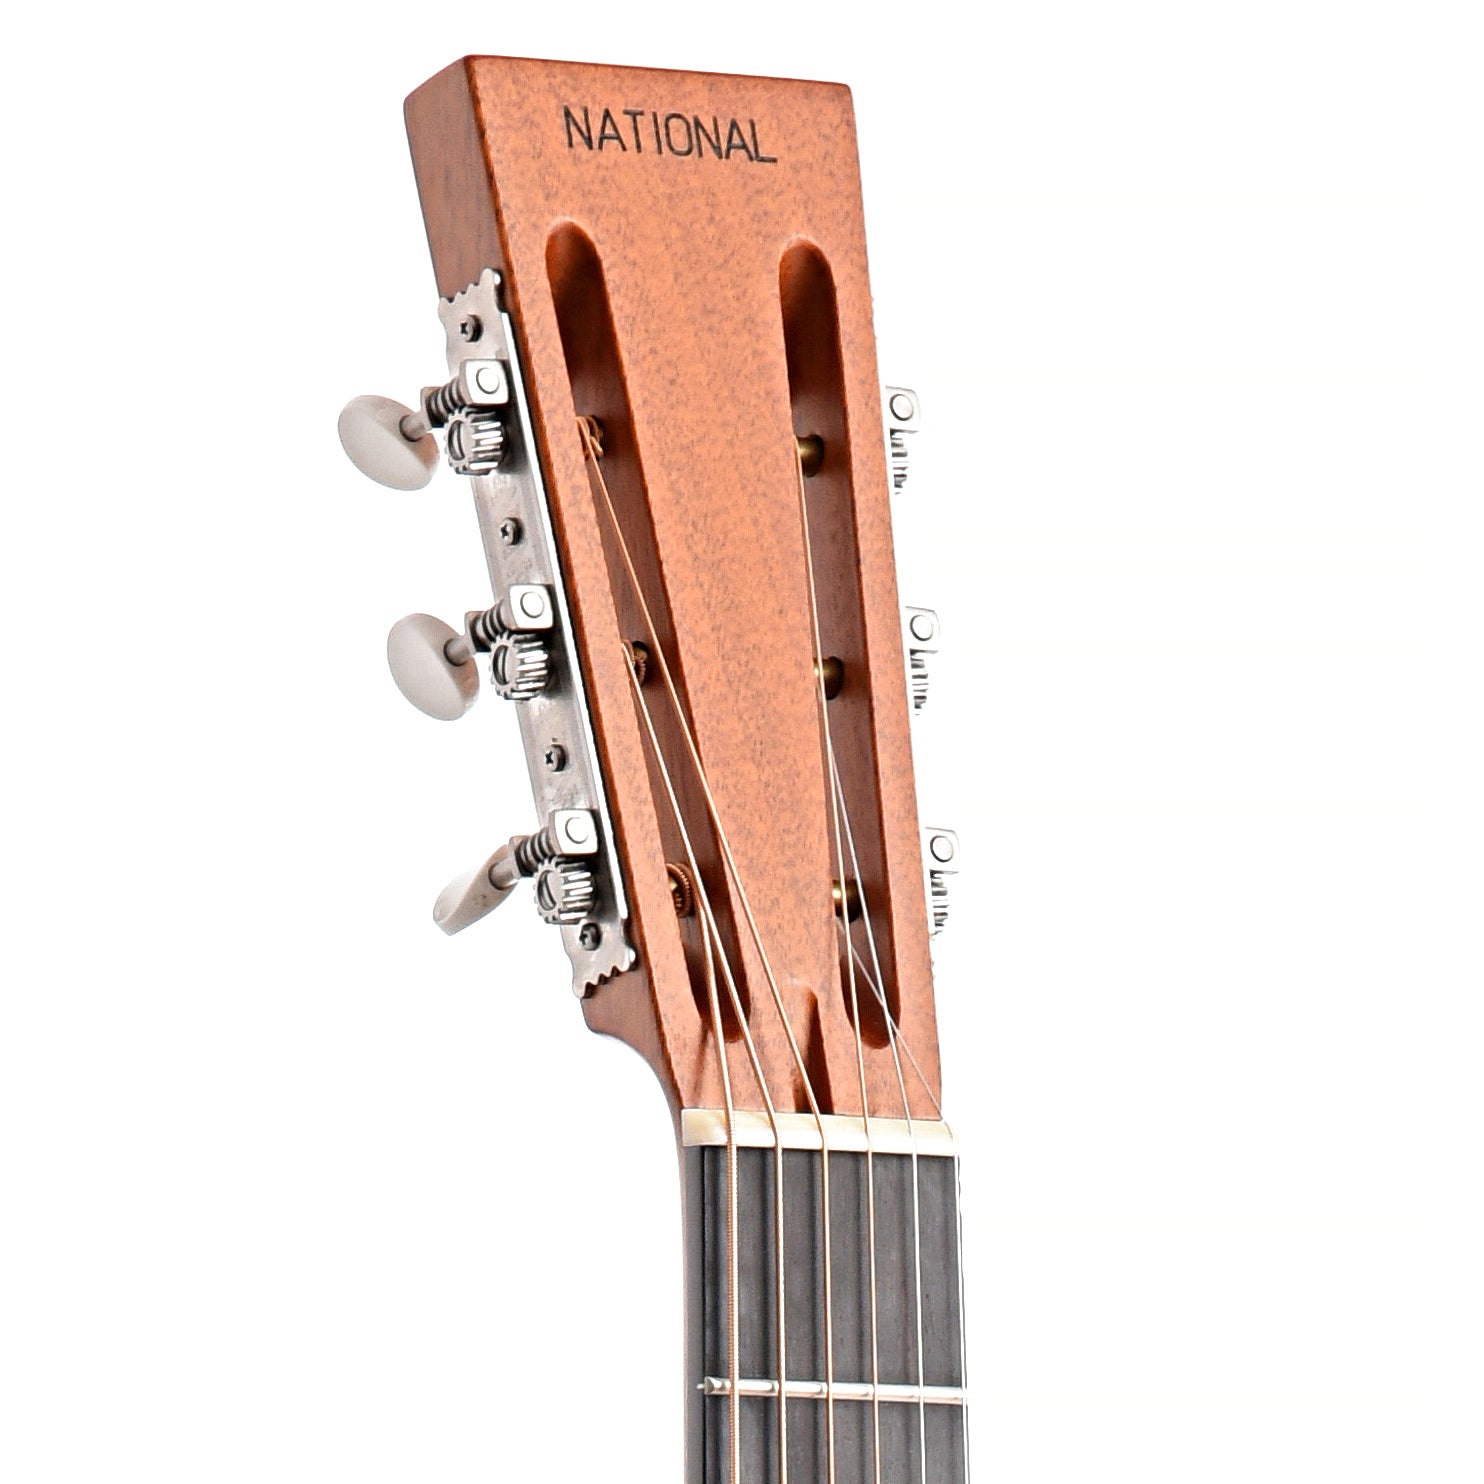 Image 6 of National NRP & Case - SKU# NGNRP14-STEEL : Product Type Resonator & Hawaiian Guitars : Elderly Instruments